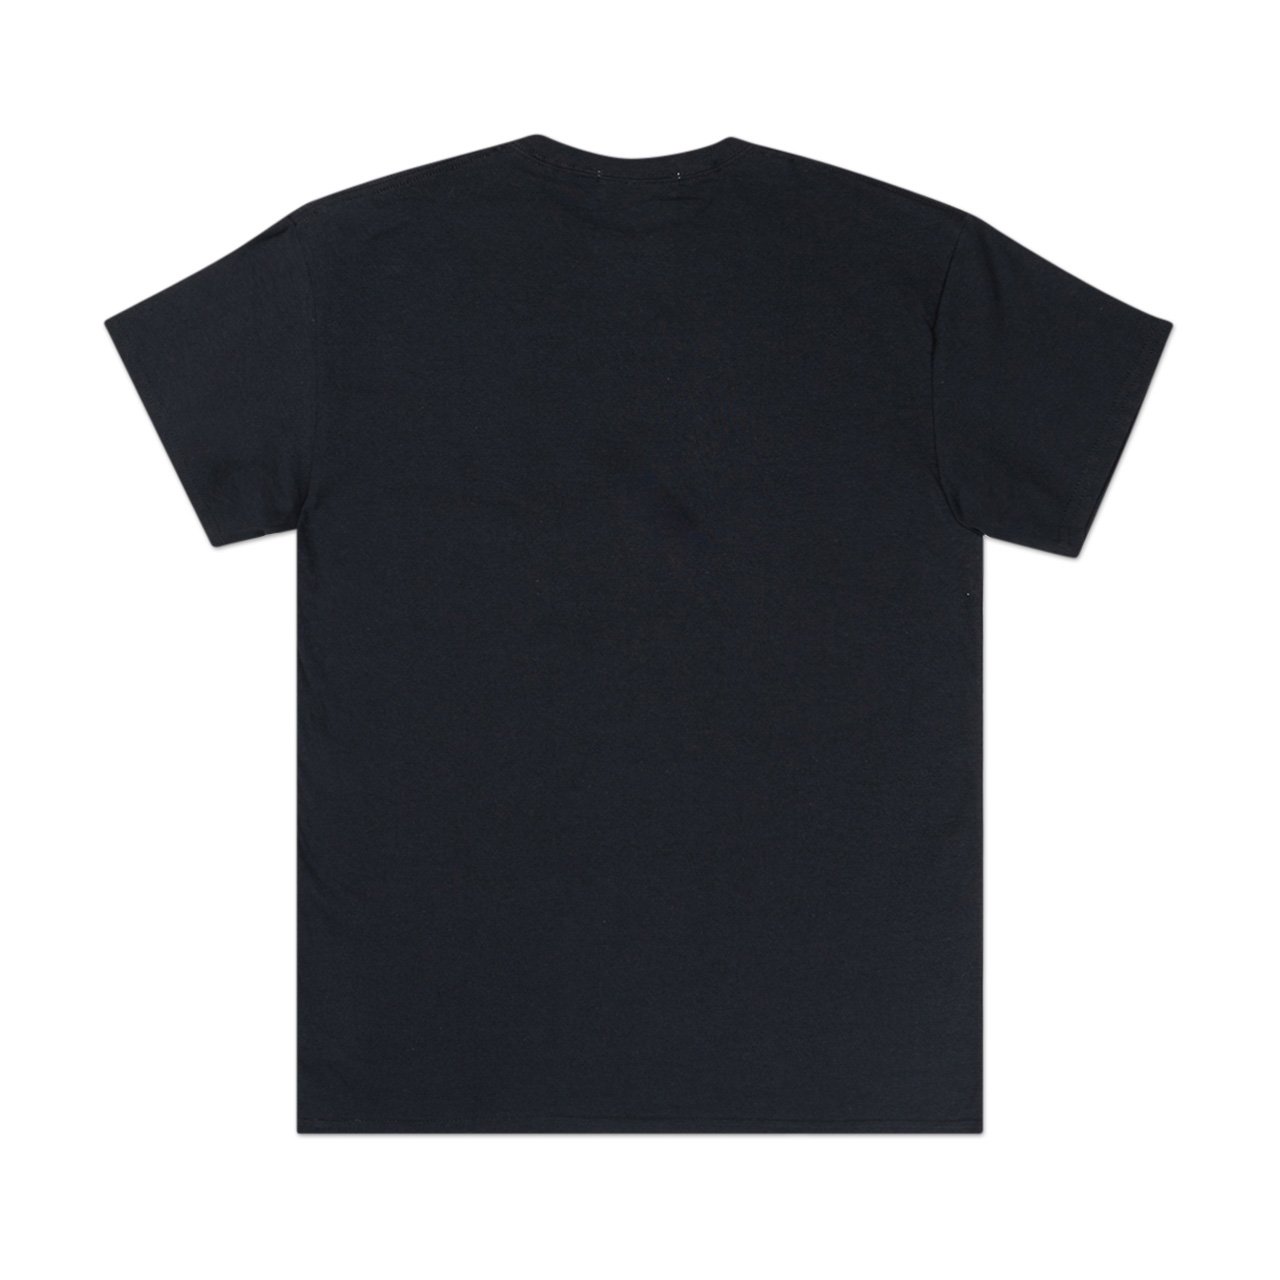 flagstuff x larry clark t-shirt (black) - 19aw-fsxlc-06-blk - a.plus - Image - 2